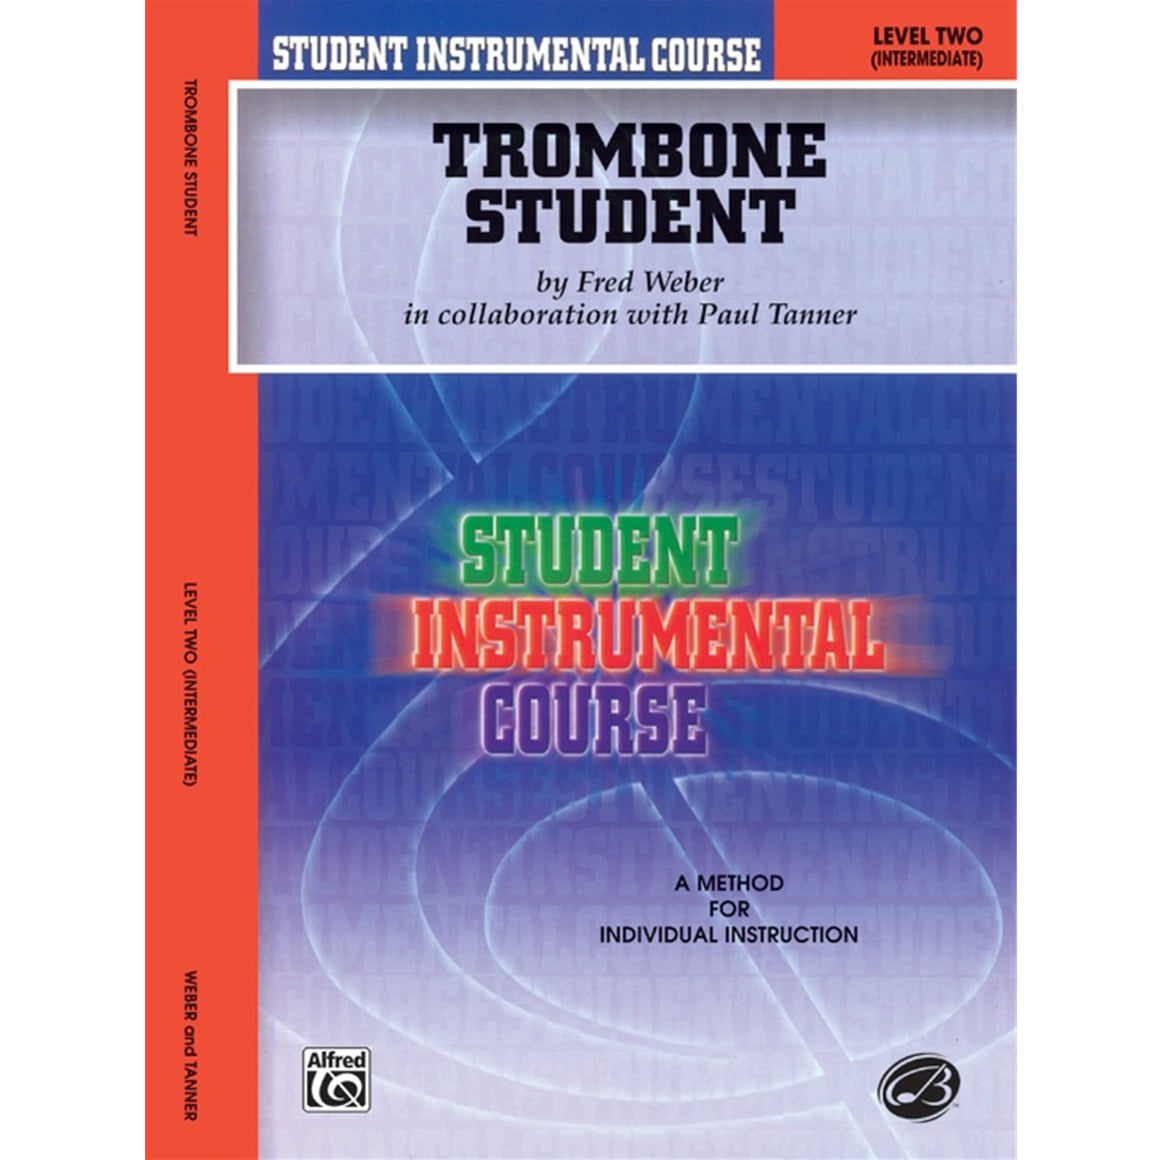 ALFRED BIC00256A Student Instrumental Course: Trombone Student, Level II [Trombone]